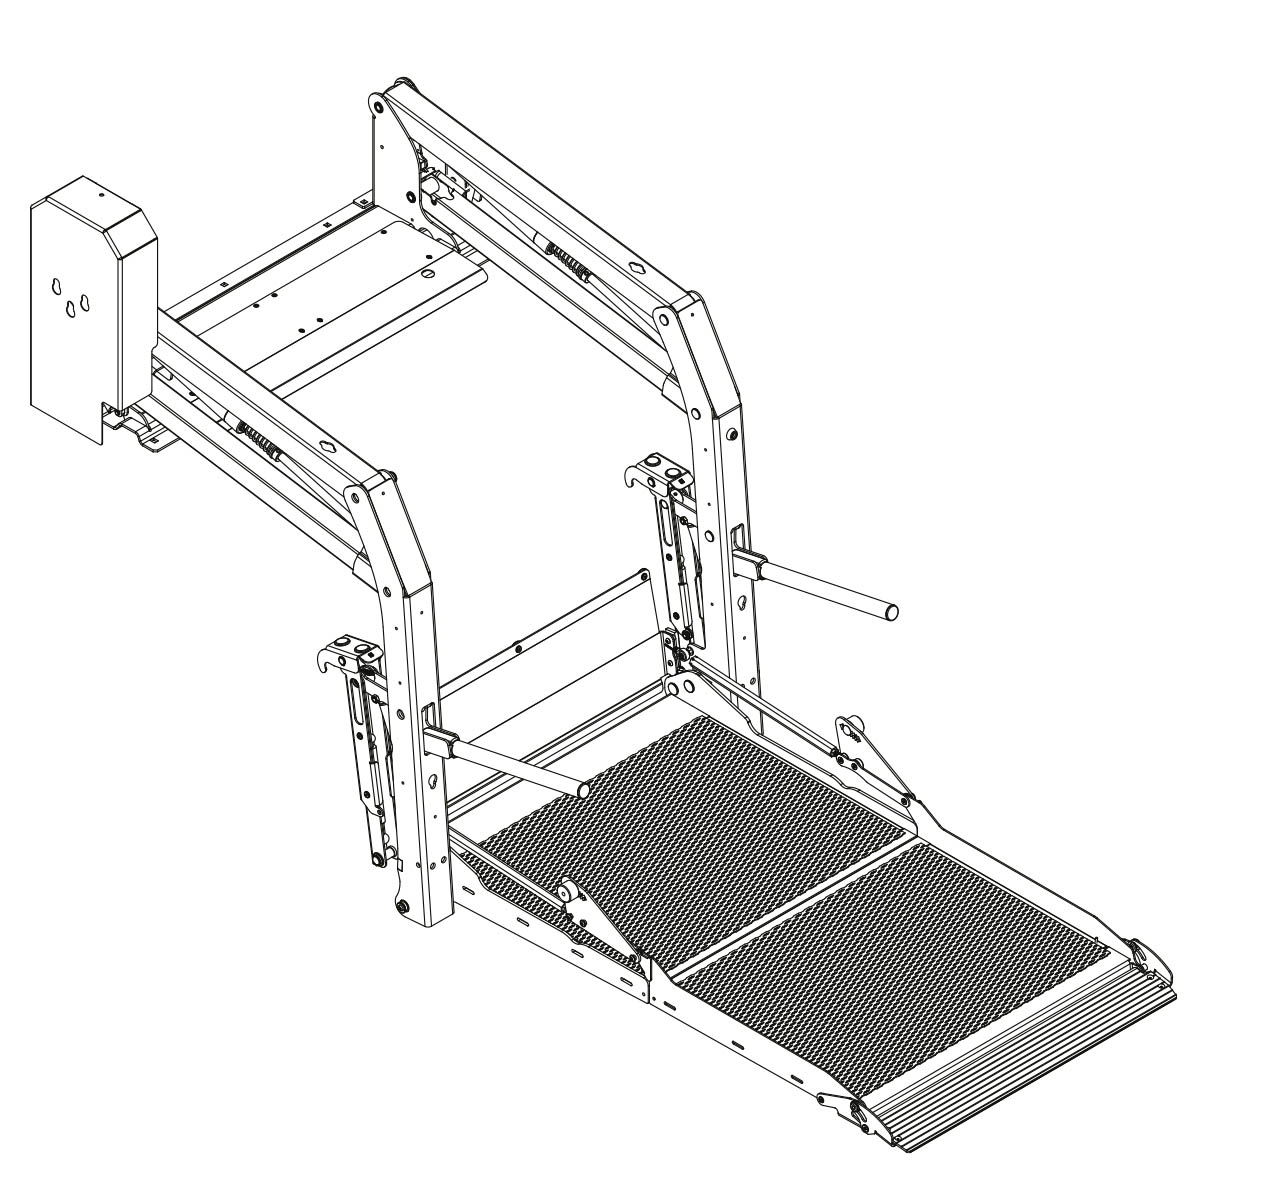 Illustration of an E-1320 folding